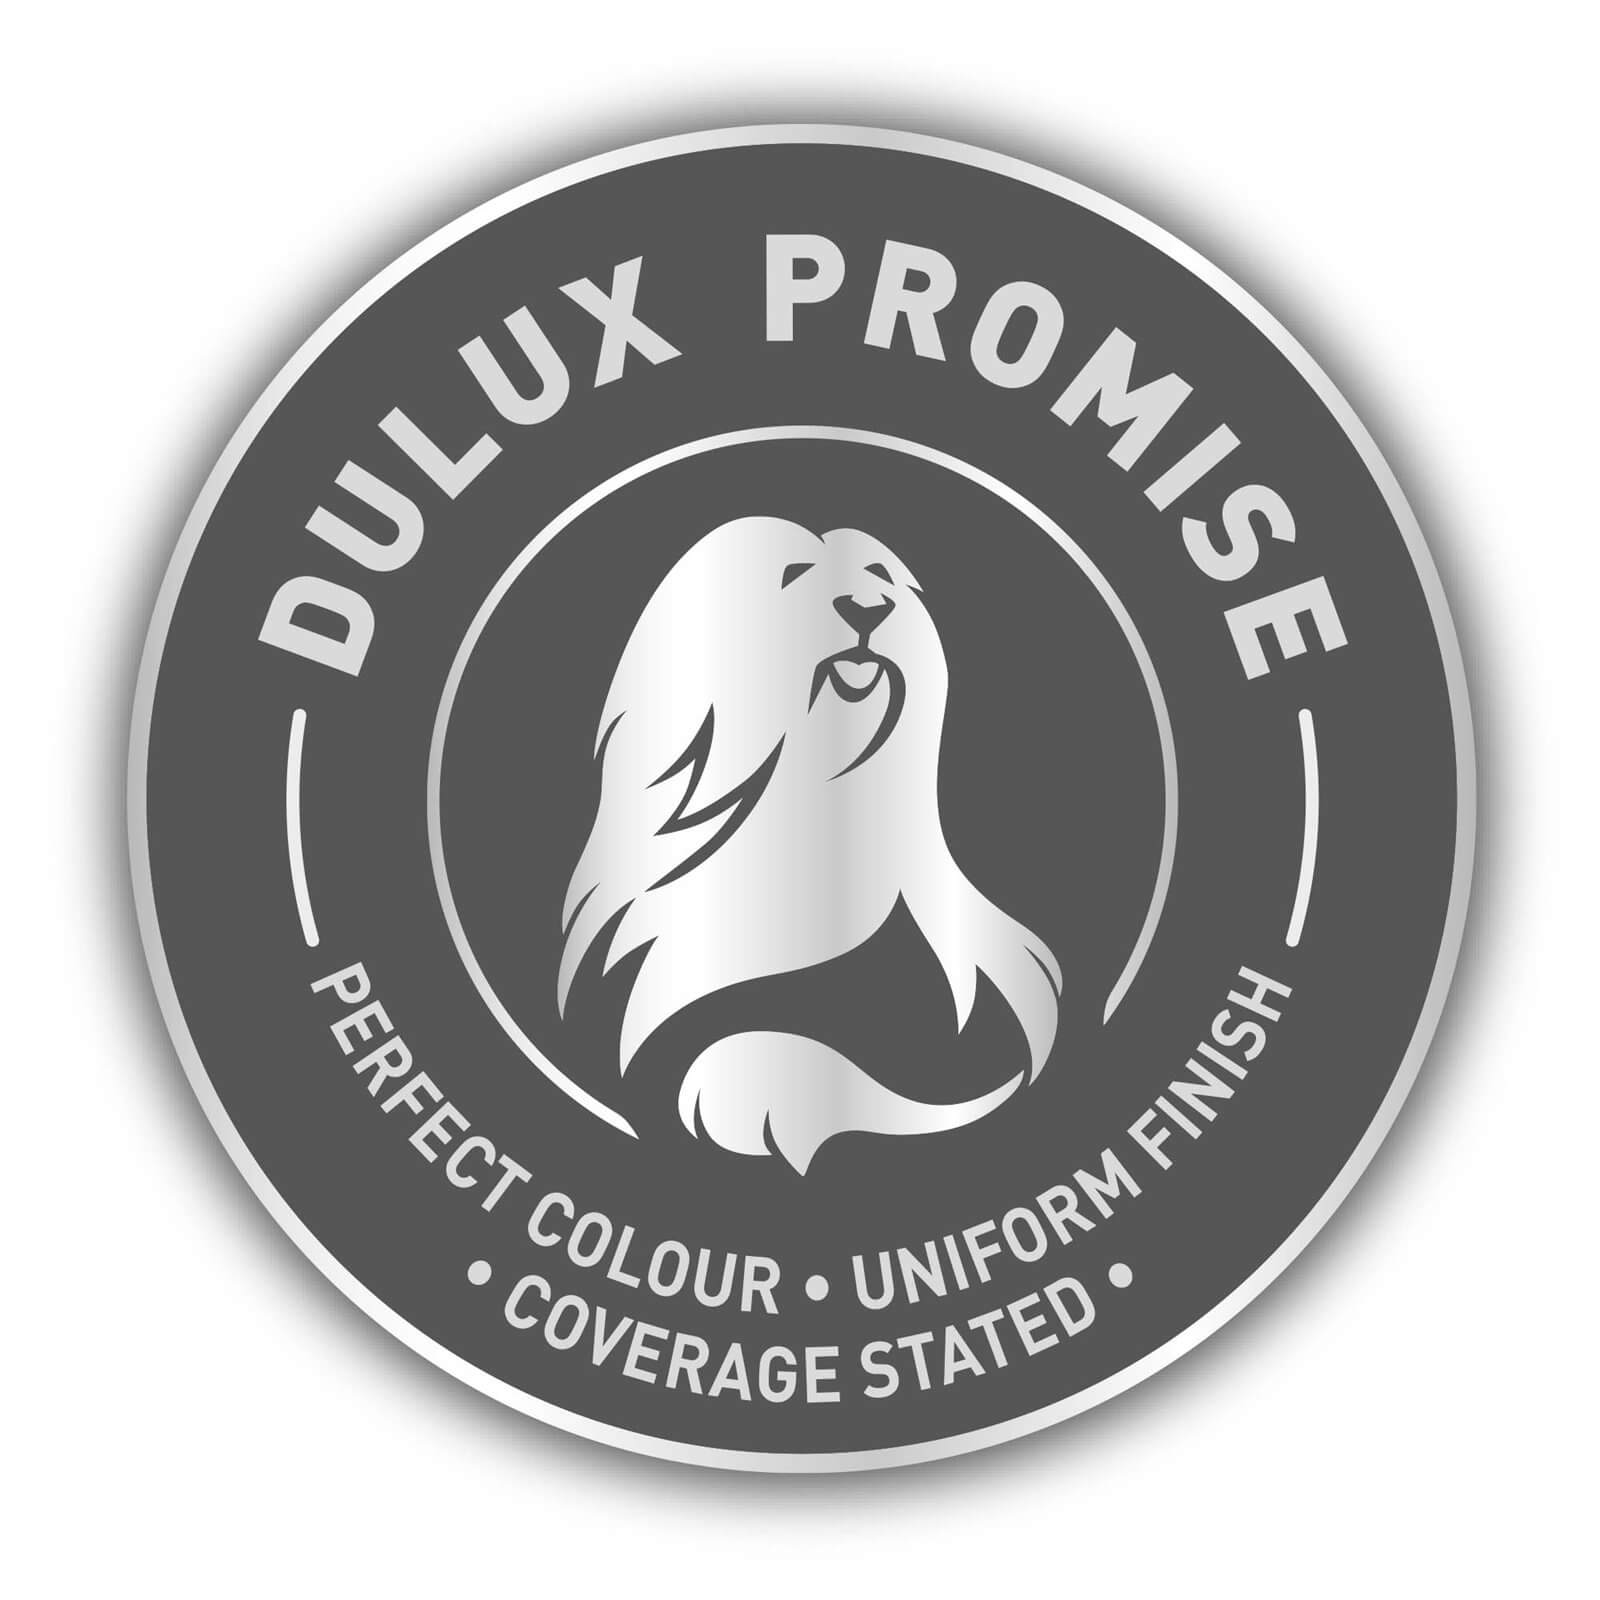 Dulux Feature Wall Redcurrant Glory - Matt Emulsion Paint - 1.25L